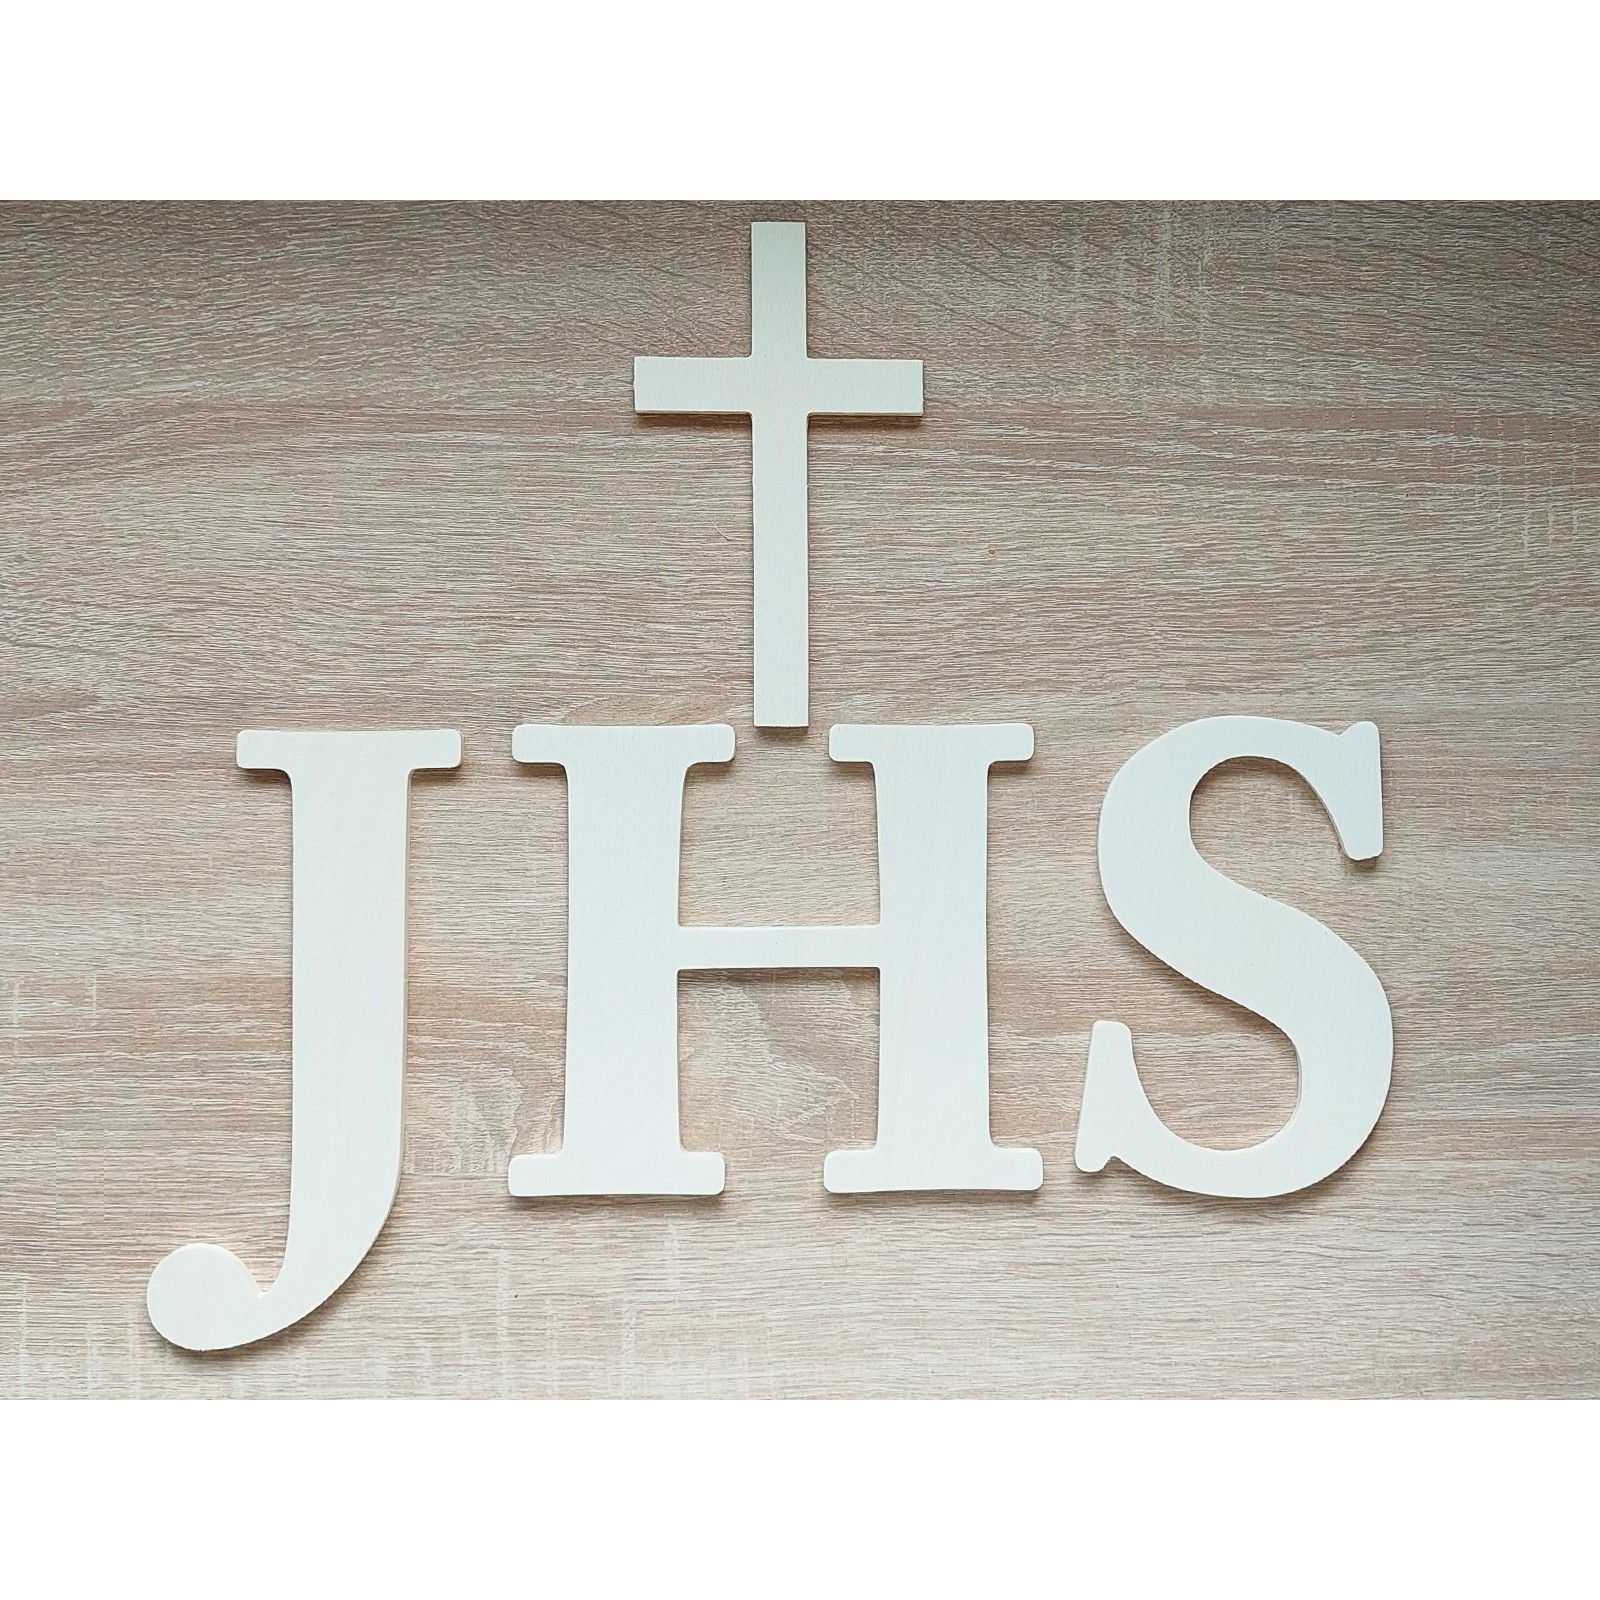 Wooden Christian inscription - JHS and a cross, width 42 cm